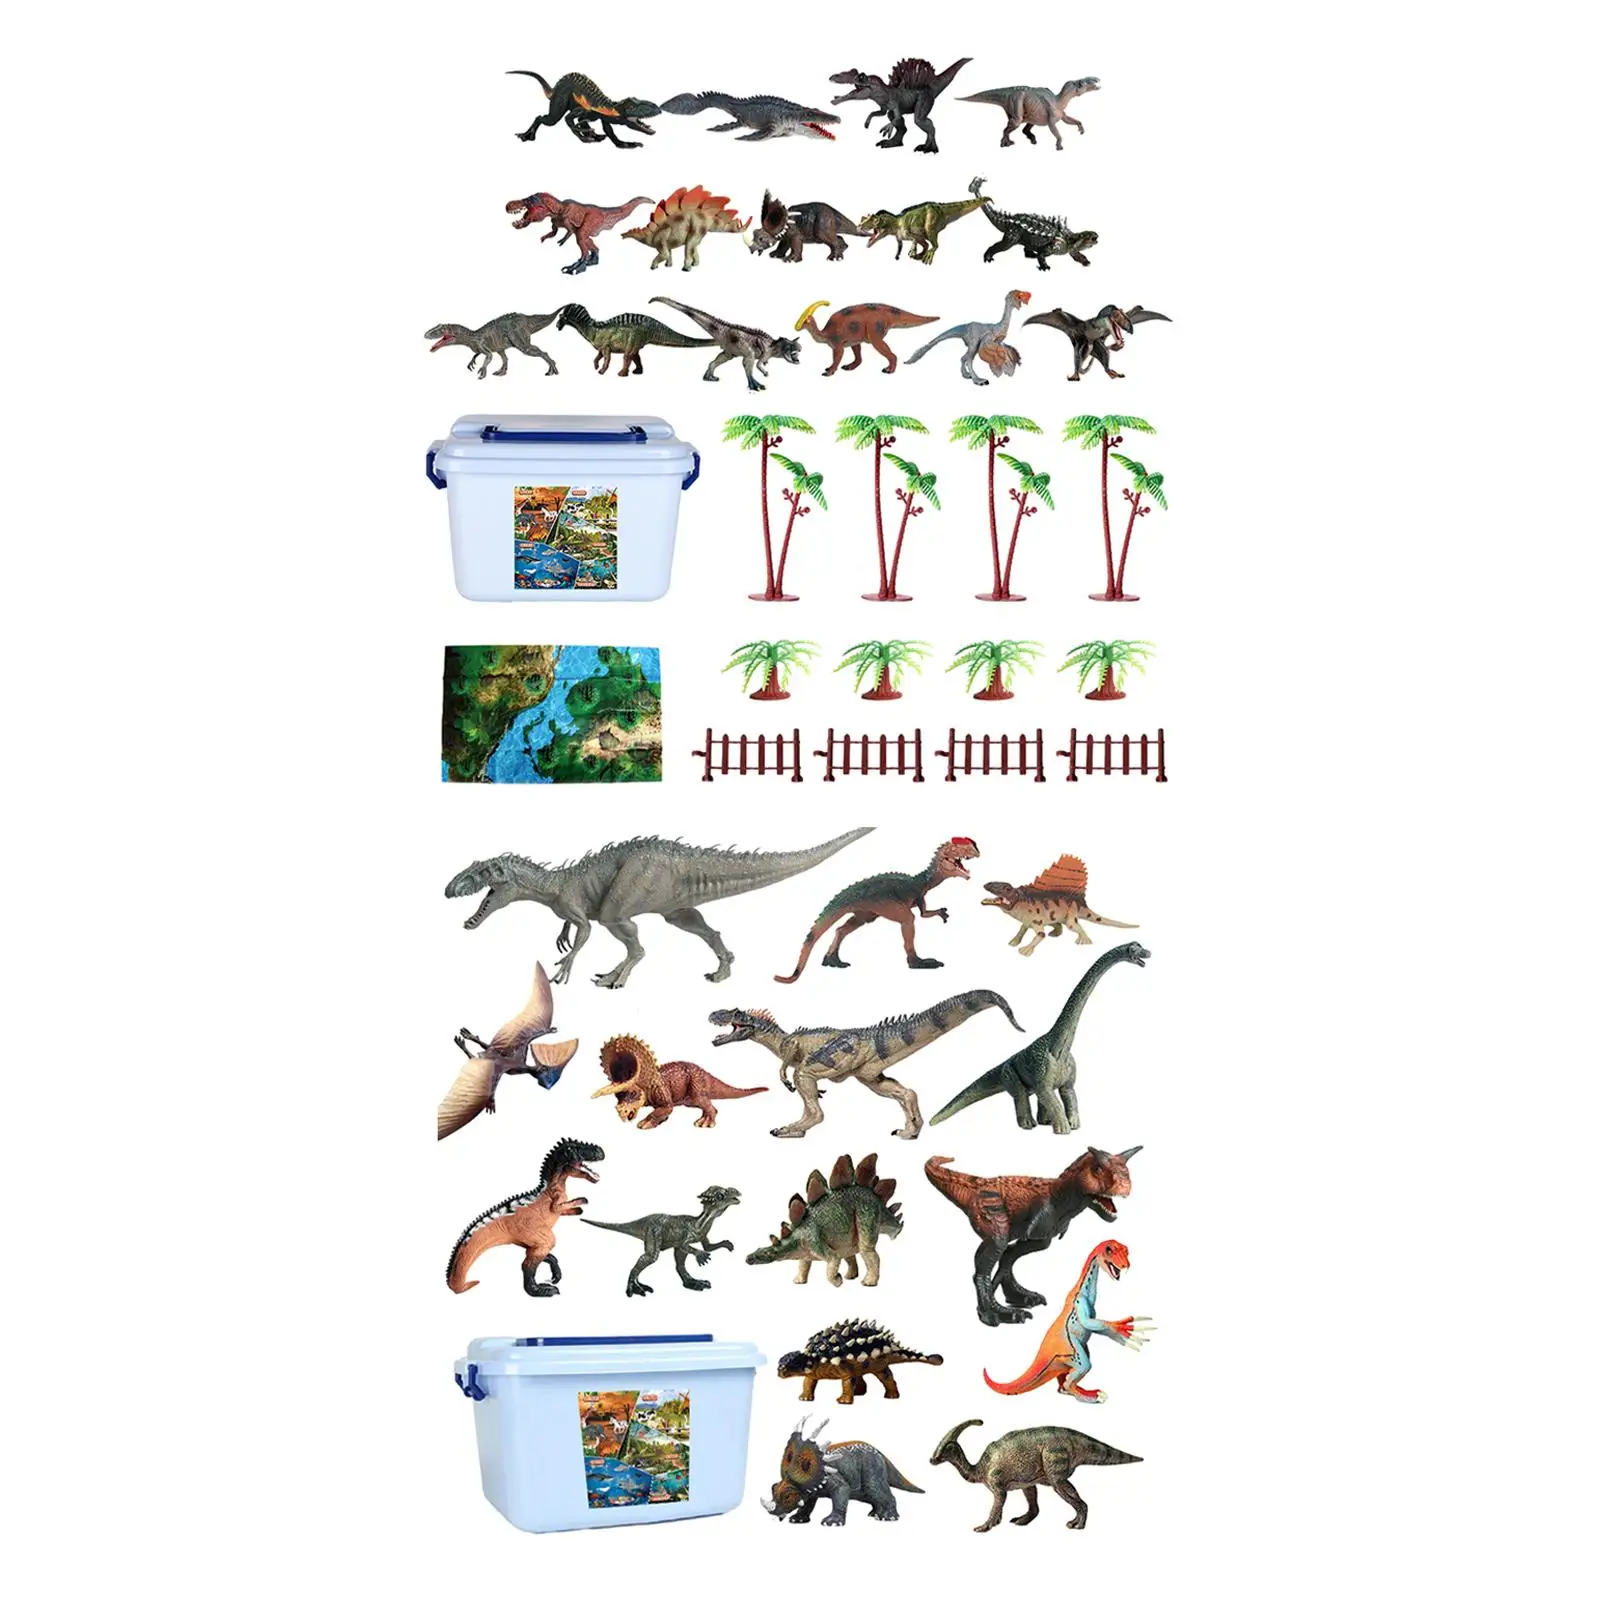 15x Kids Dinosaur Toys Pretend Dinosaur Figures Playset for Birthday Holiday